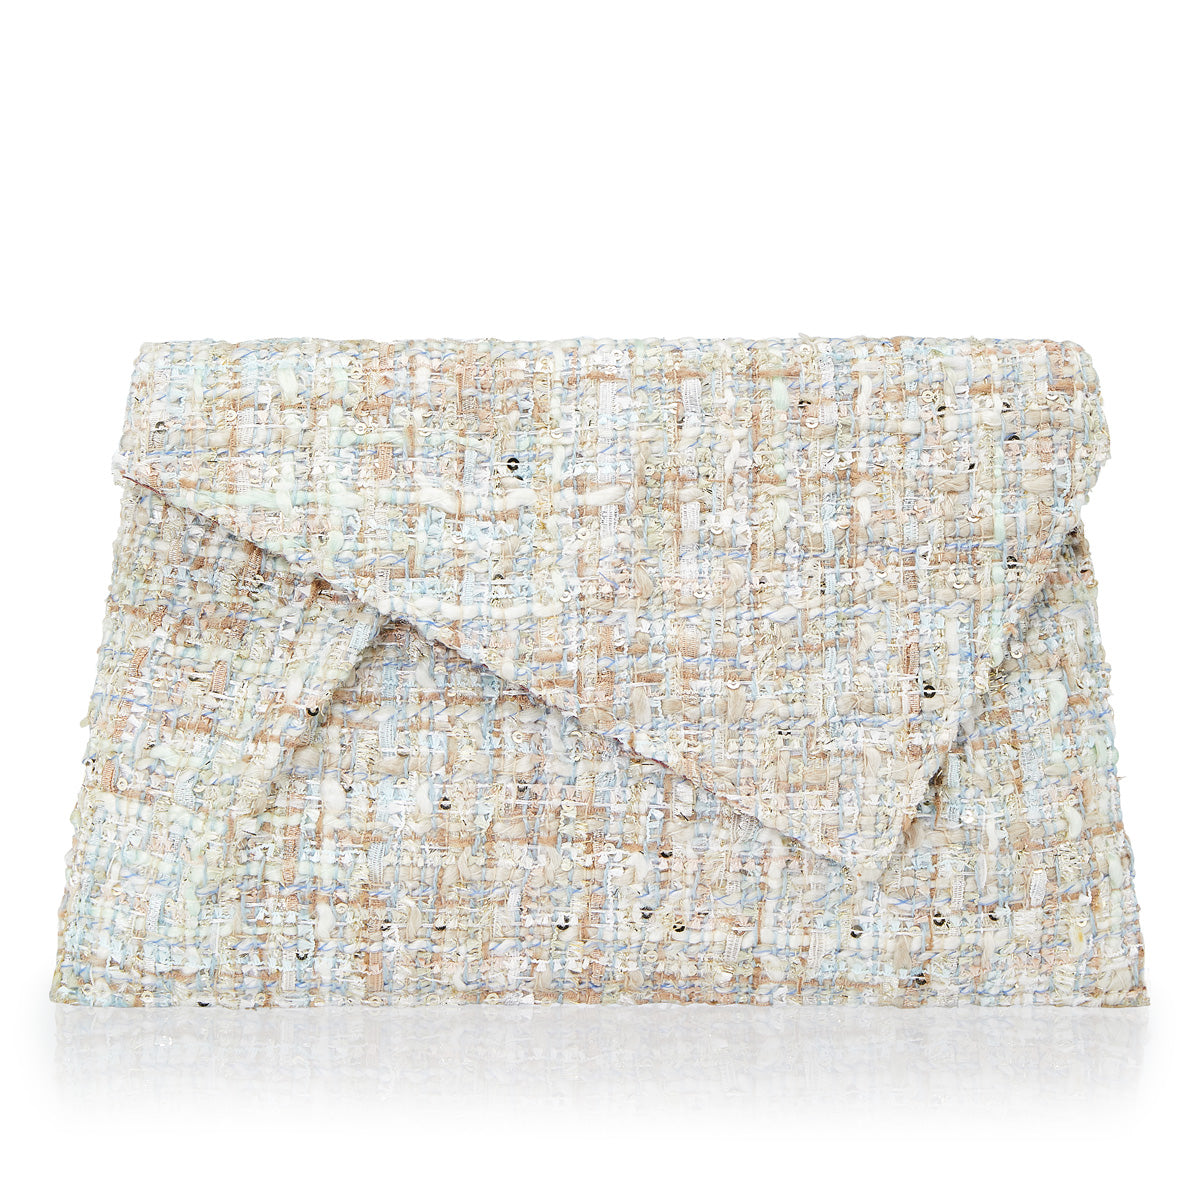 Shoulder bag with tweed fabric in pastel tones